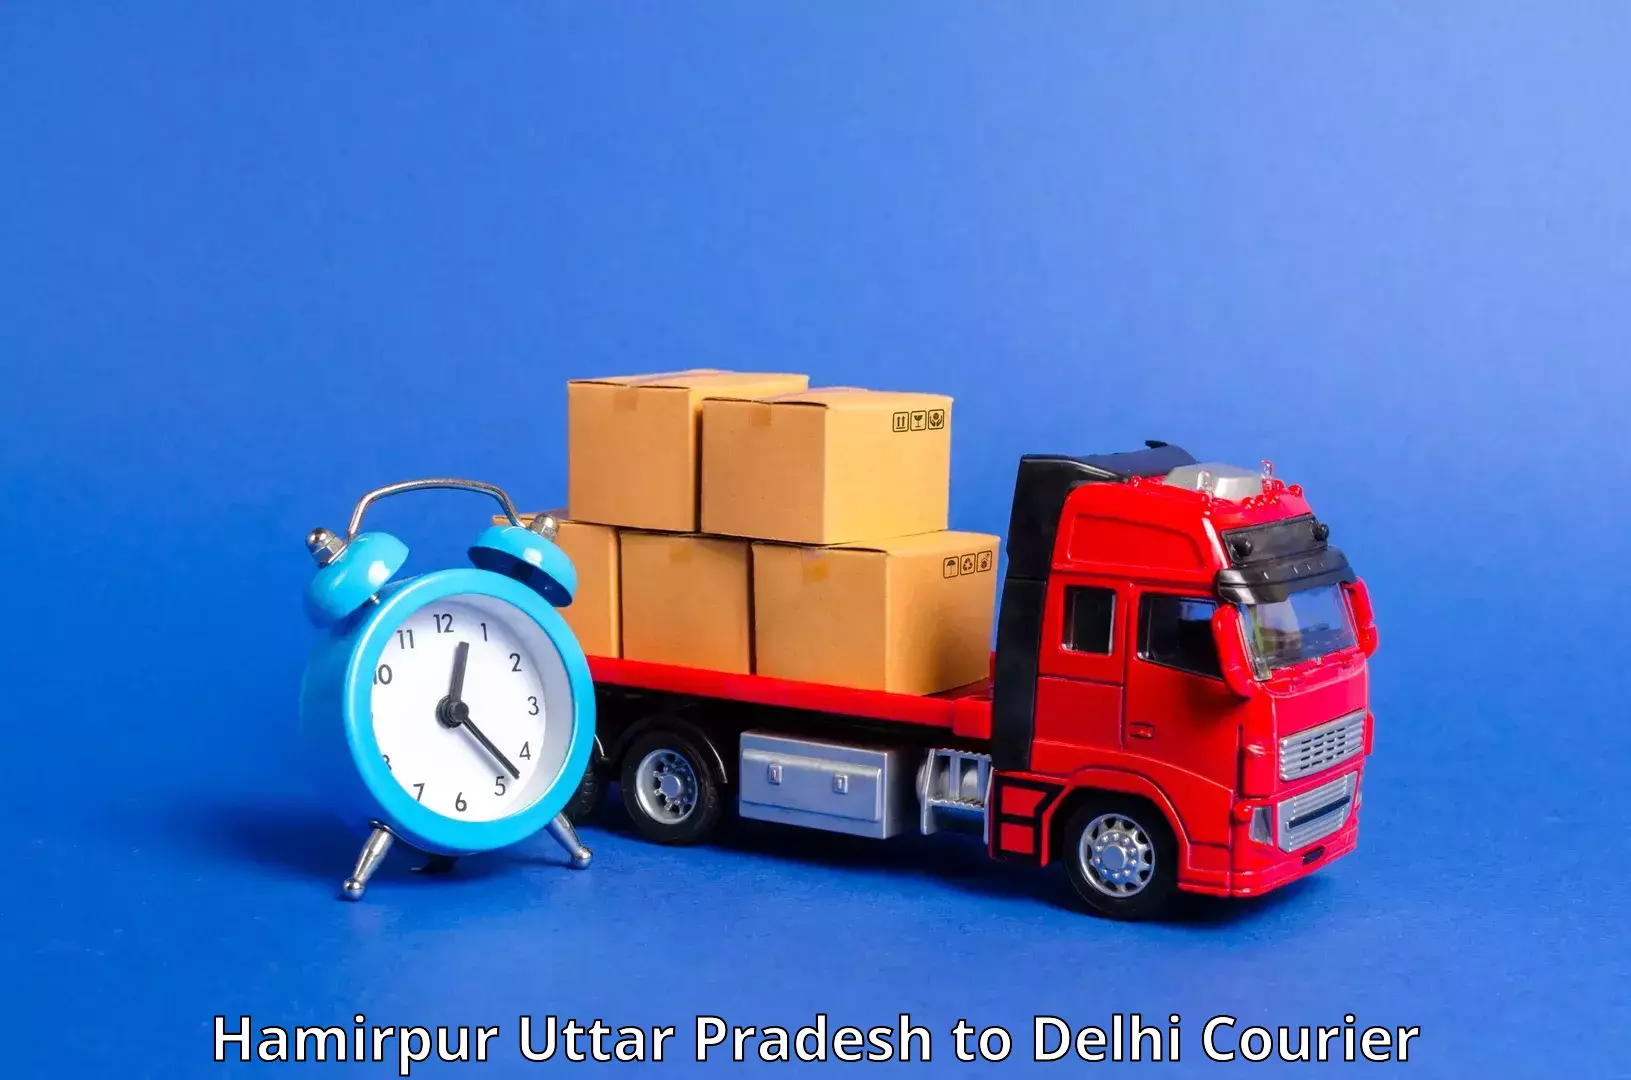 Cargo delivery service Hamirpur Uttar Pradesh to University of Delhi